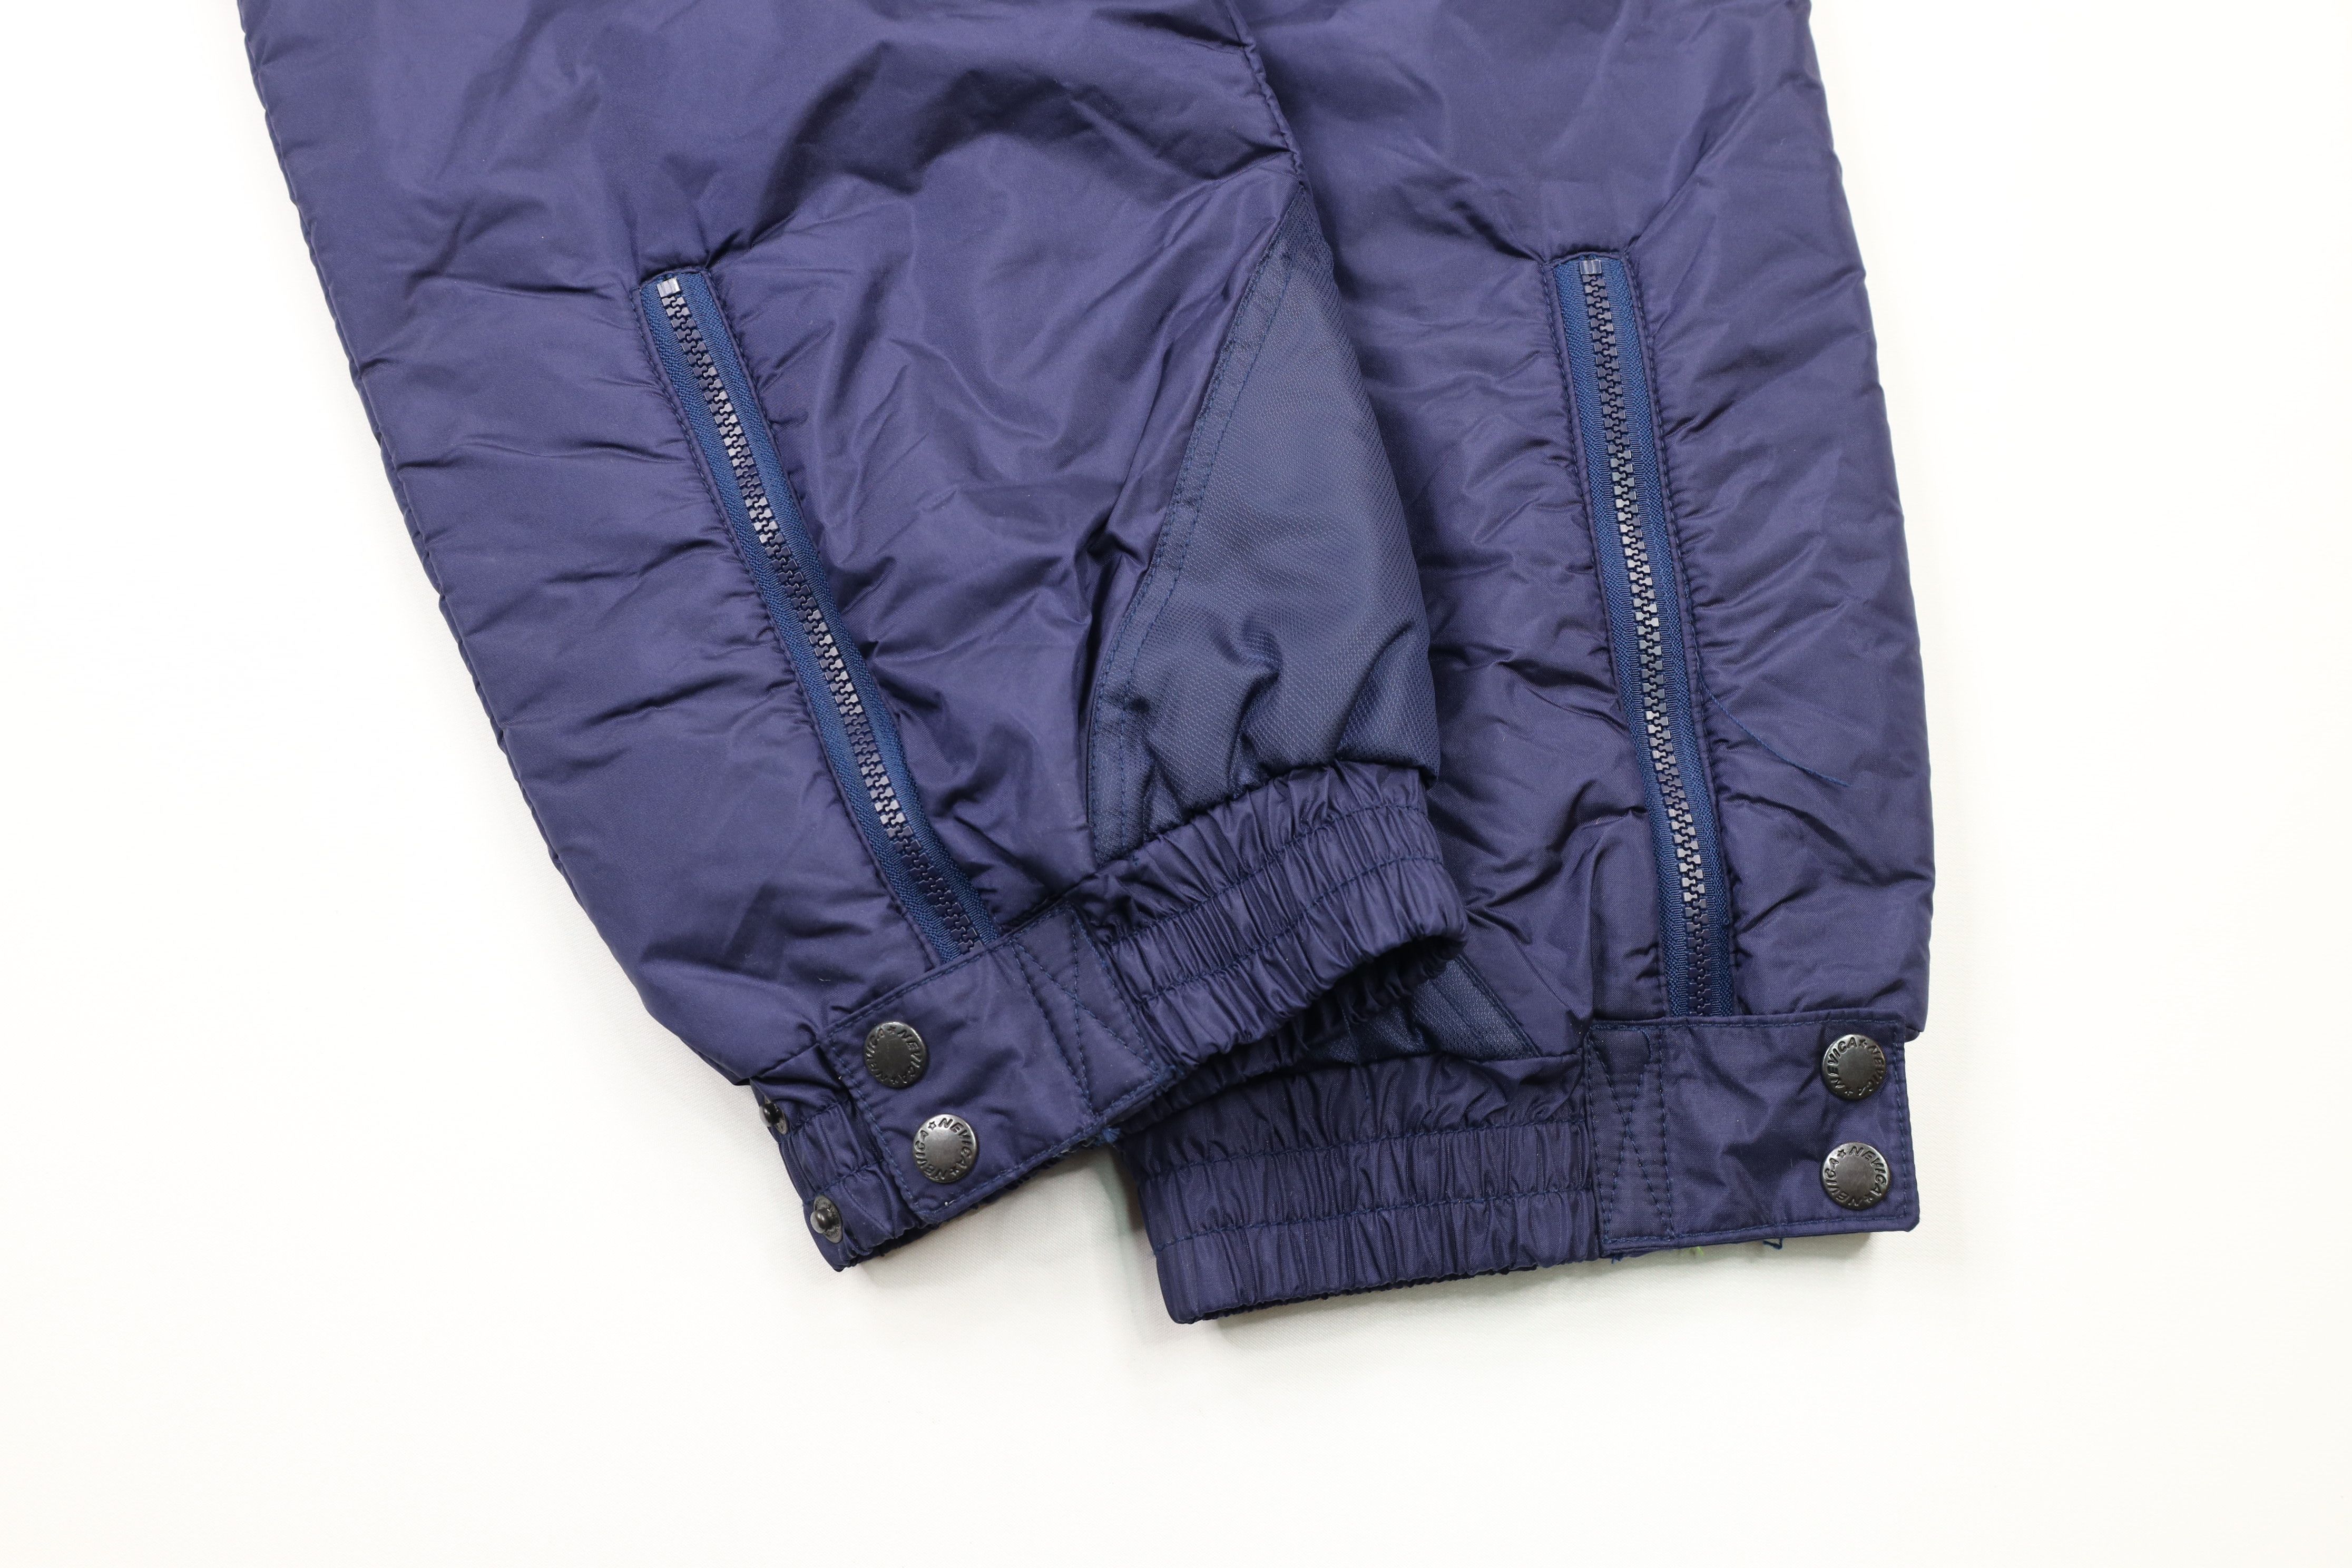 Vintage Vintage 90s Streetwear Cuffed Winter Snow Pants Navy Blue Size US 30 / EU 46 - 5 Thumbnail